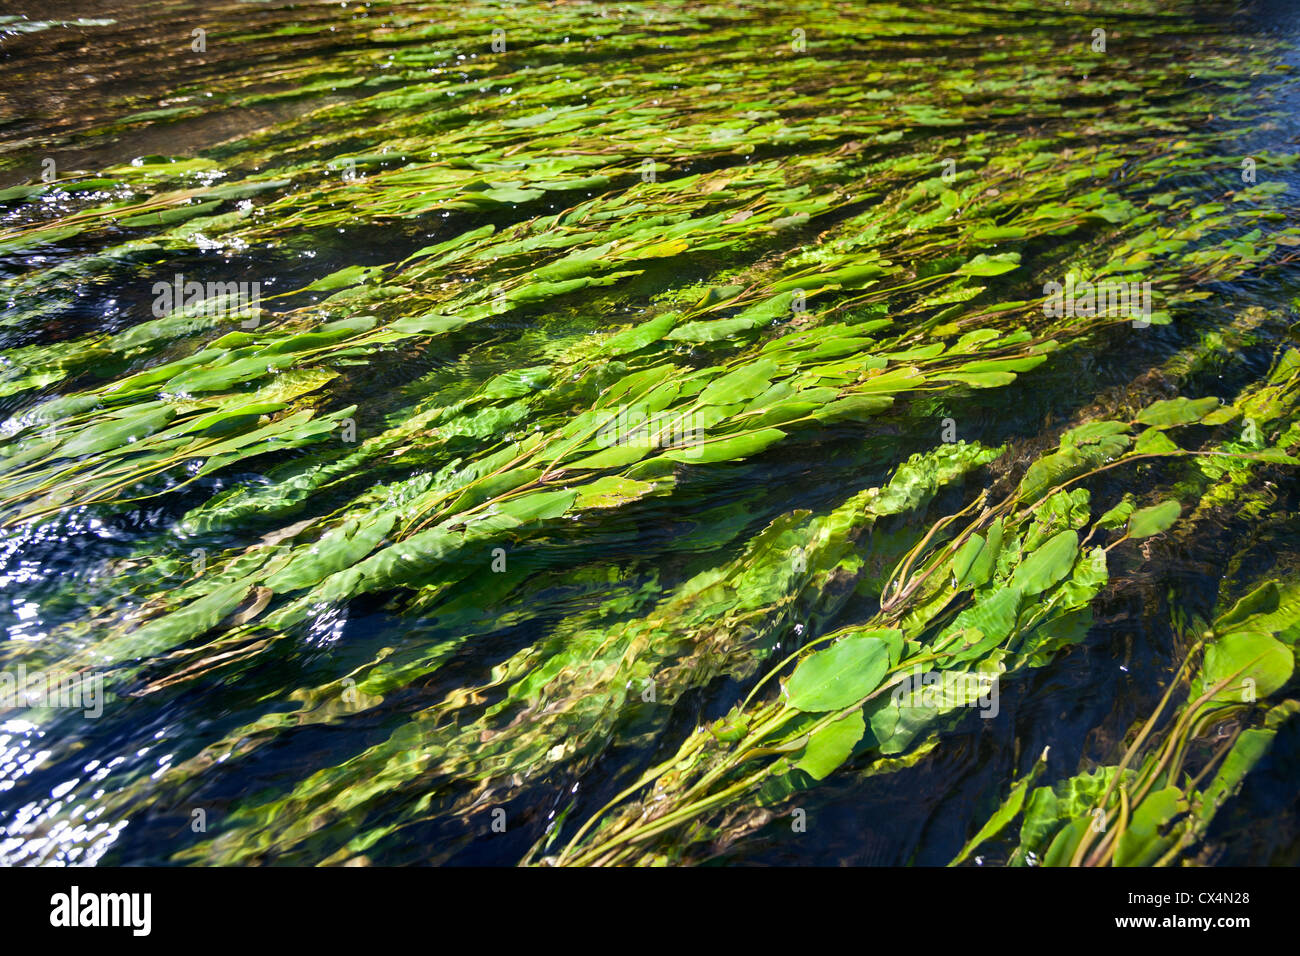 Longleaf lenticchia d'acqua (Potamogeton nodosus) galleggiante nel fiume Allier corrente (Allier - Auvergne - Francia). Potamots noueux. Foto Stock